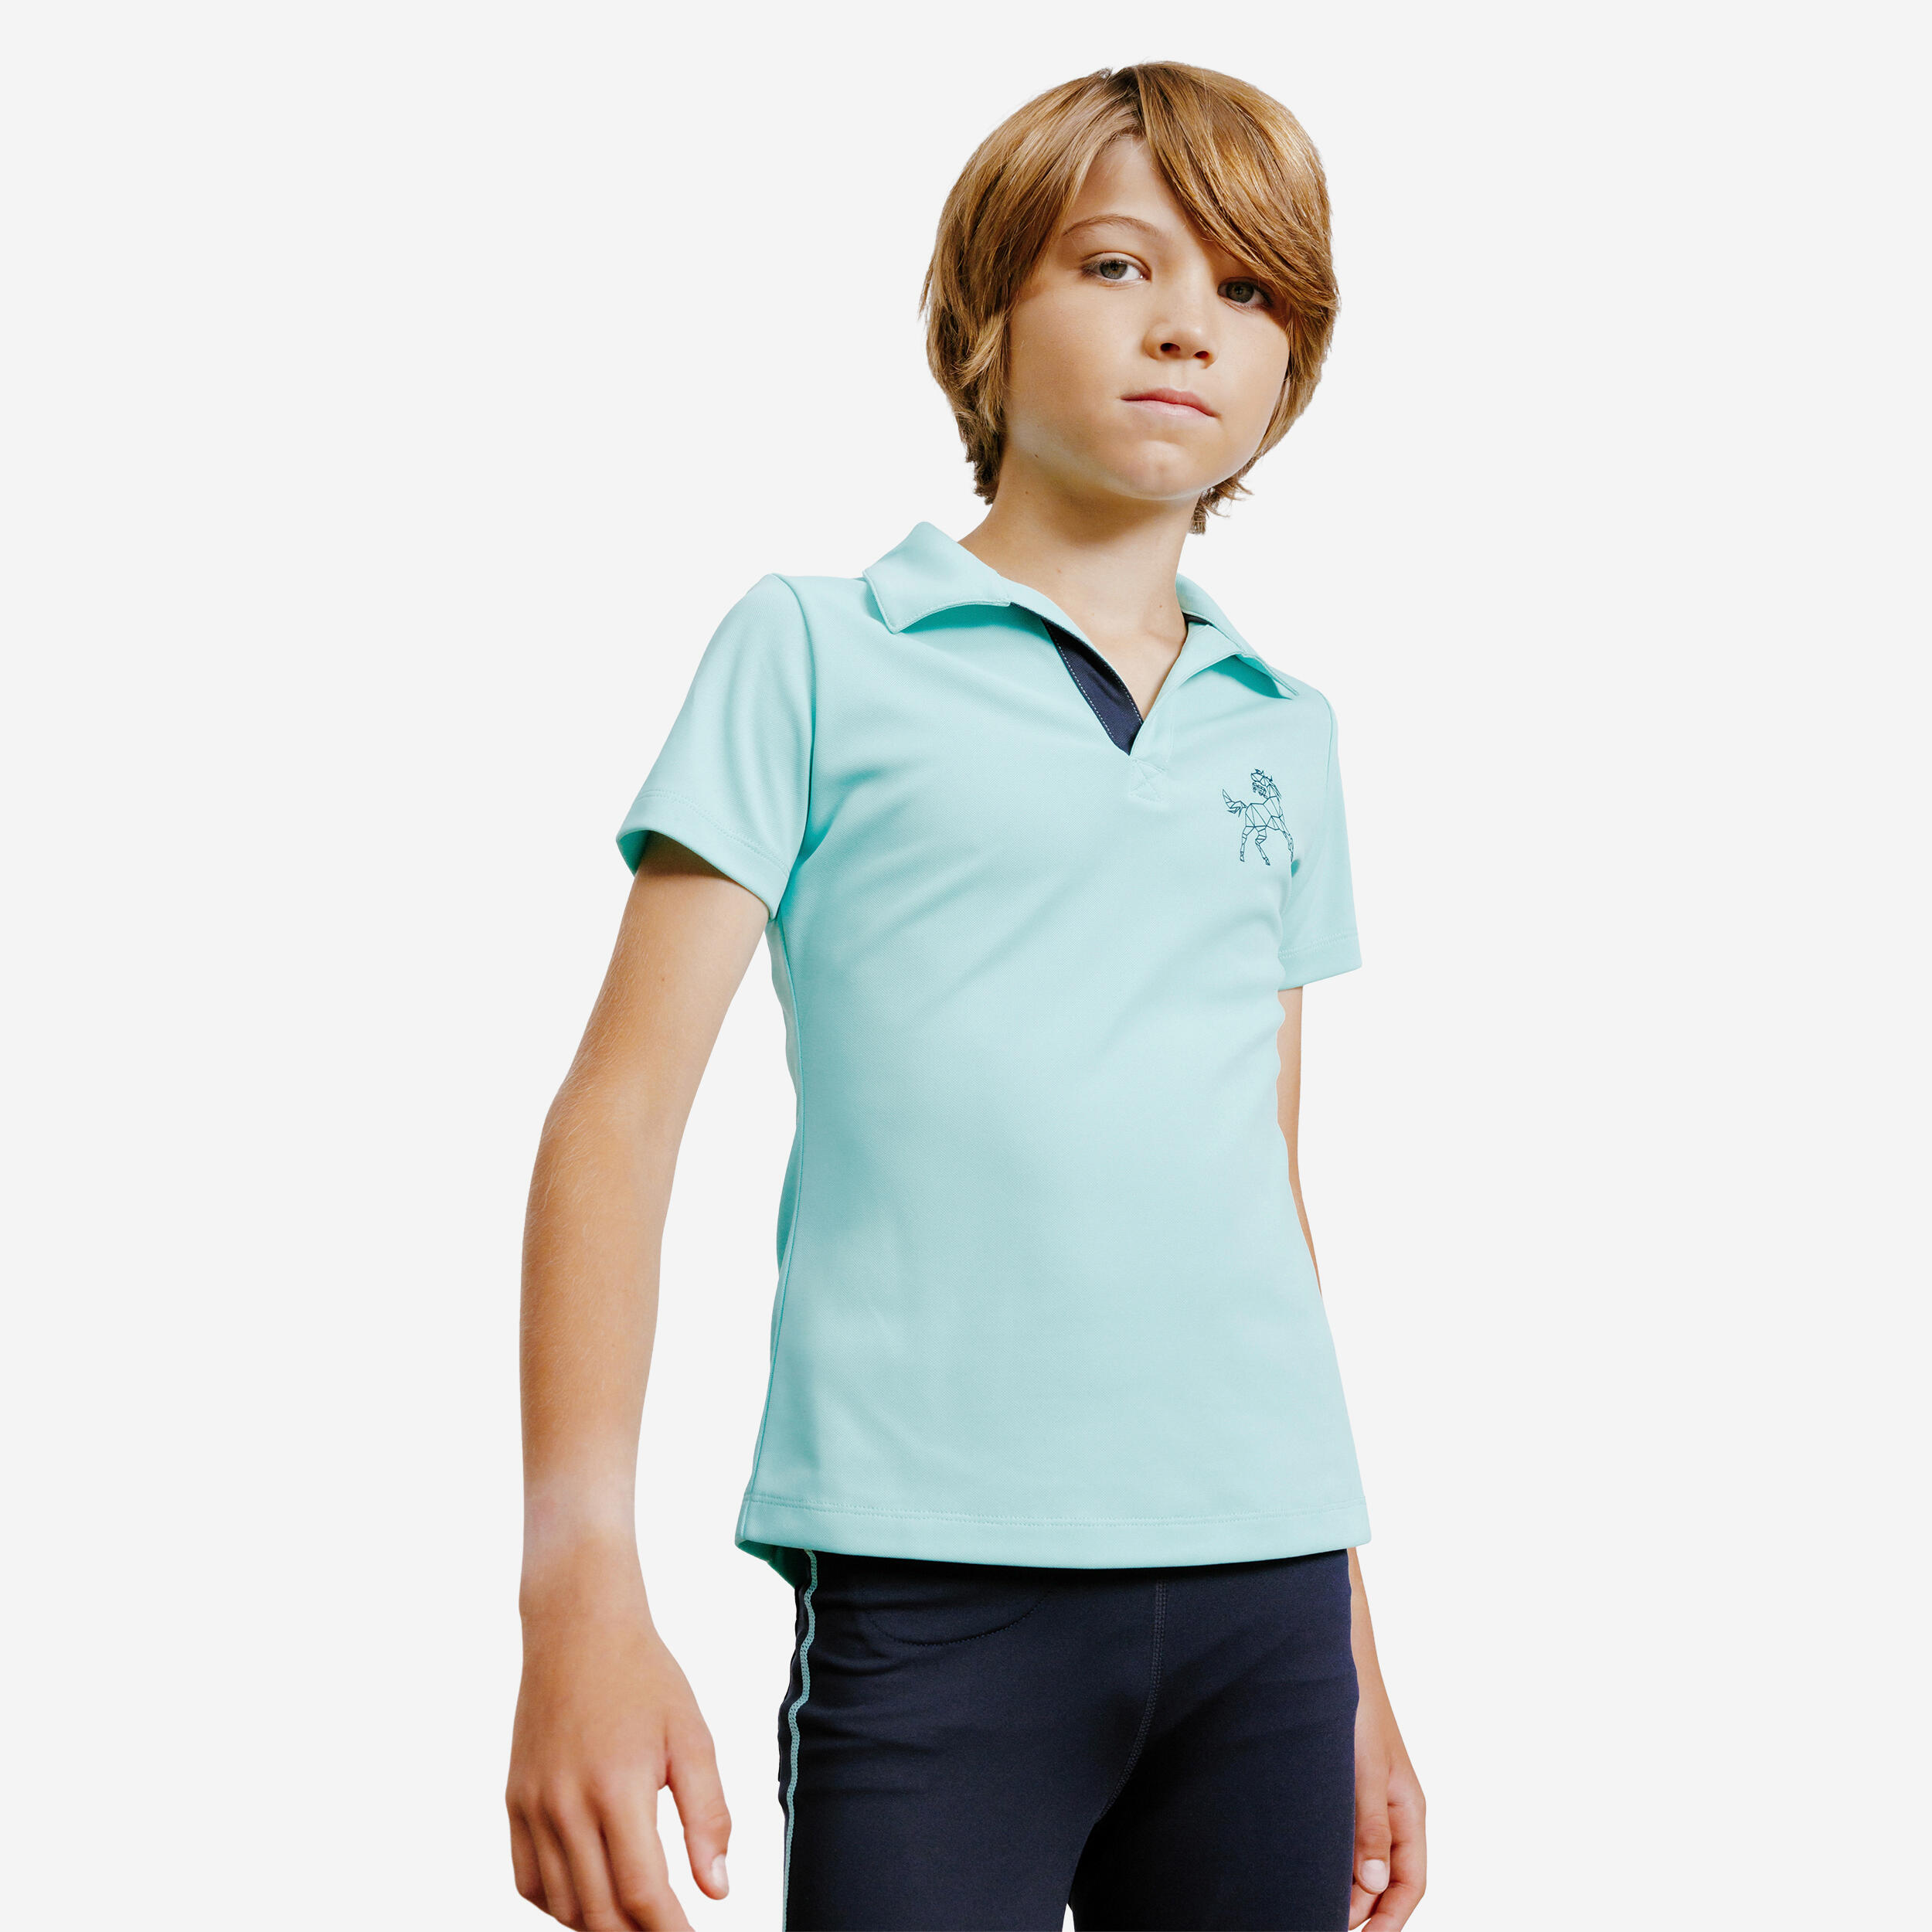 Kids' Horse Riding Short-Sleeved Mesh Polo Shirt 500 - Turquoise 1/6